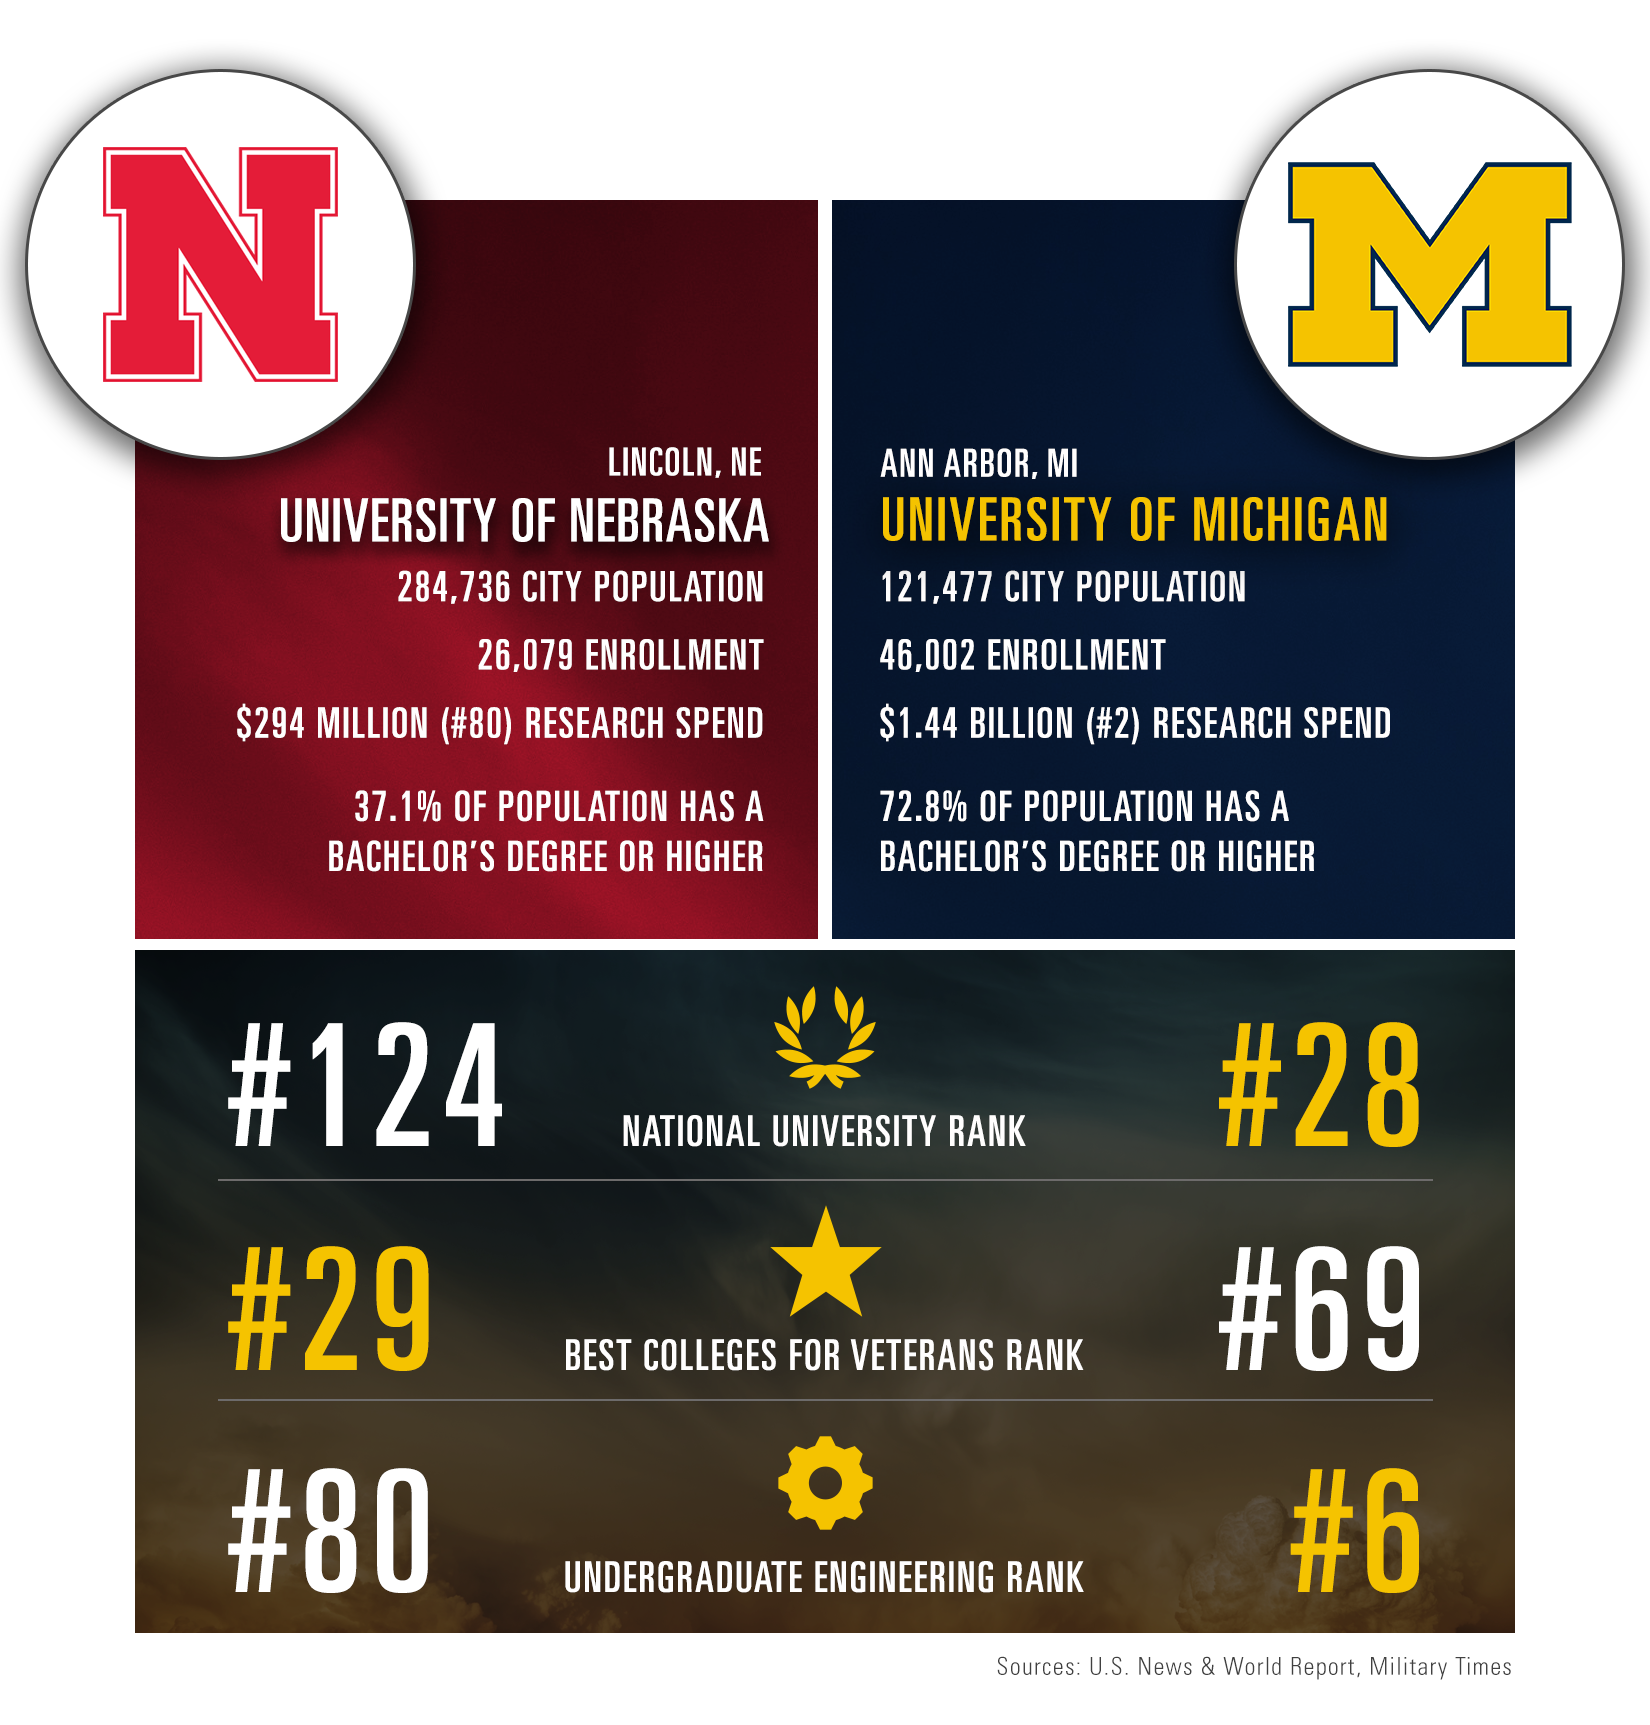 Ann Arbor vs. Lincoln – How Do We Compare?